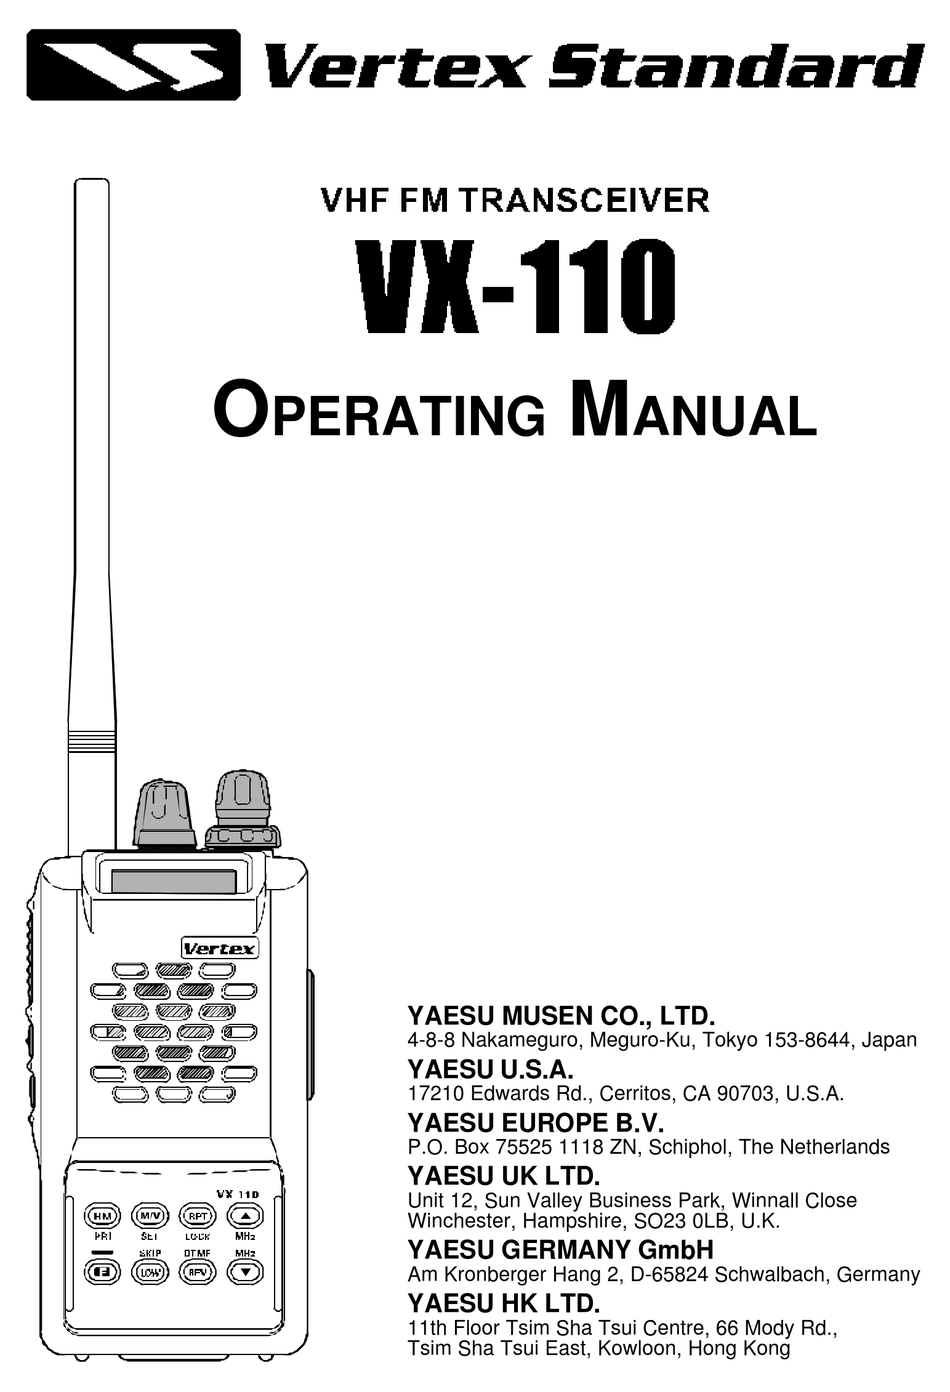 VERTEX STANDARD VX-110 OPERATING MANUAL Pdf Download | ManualsLib